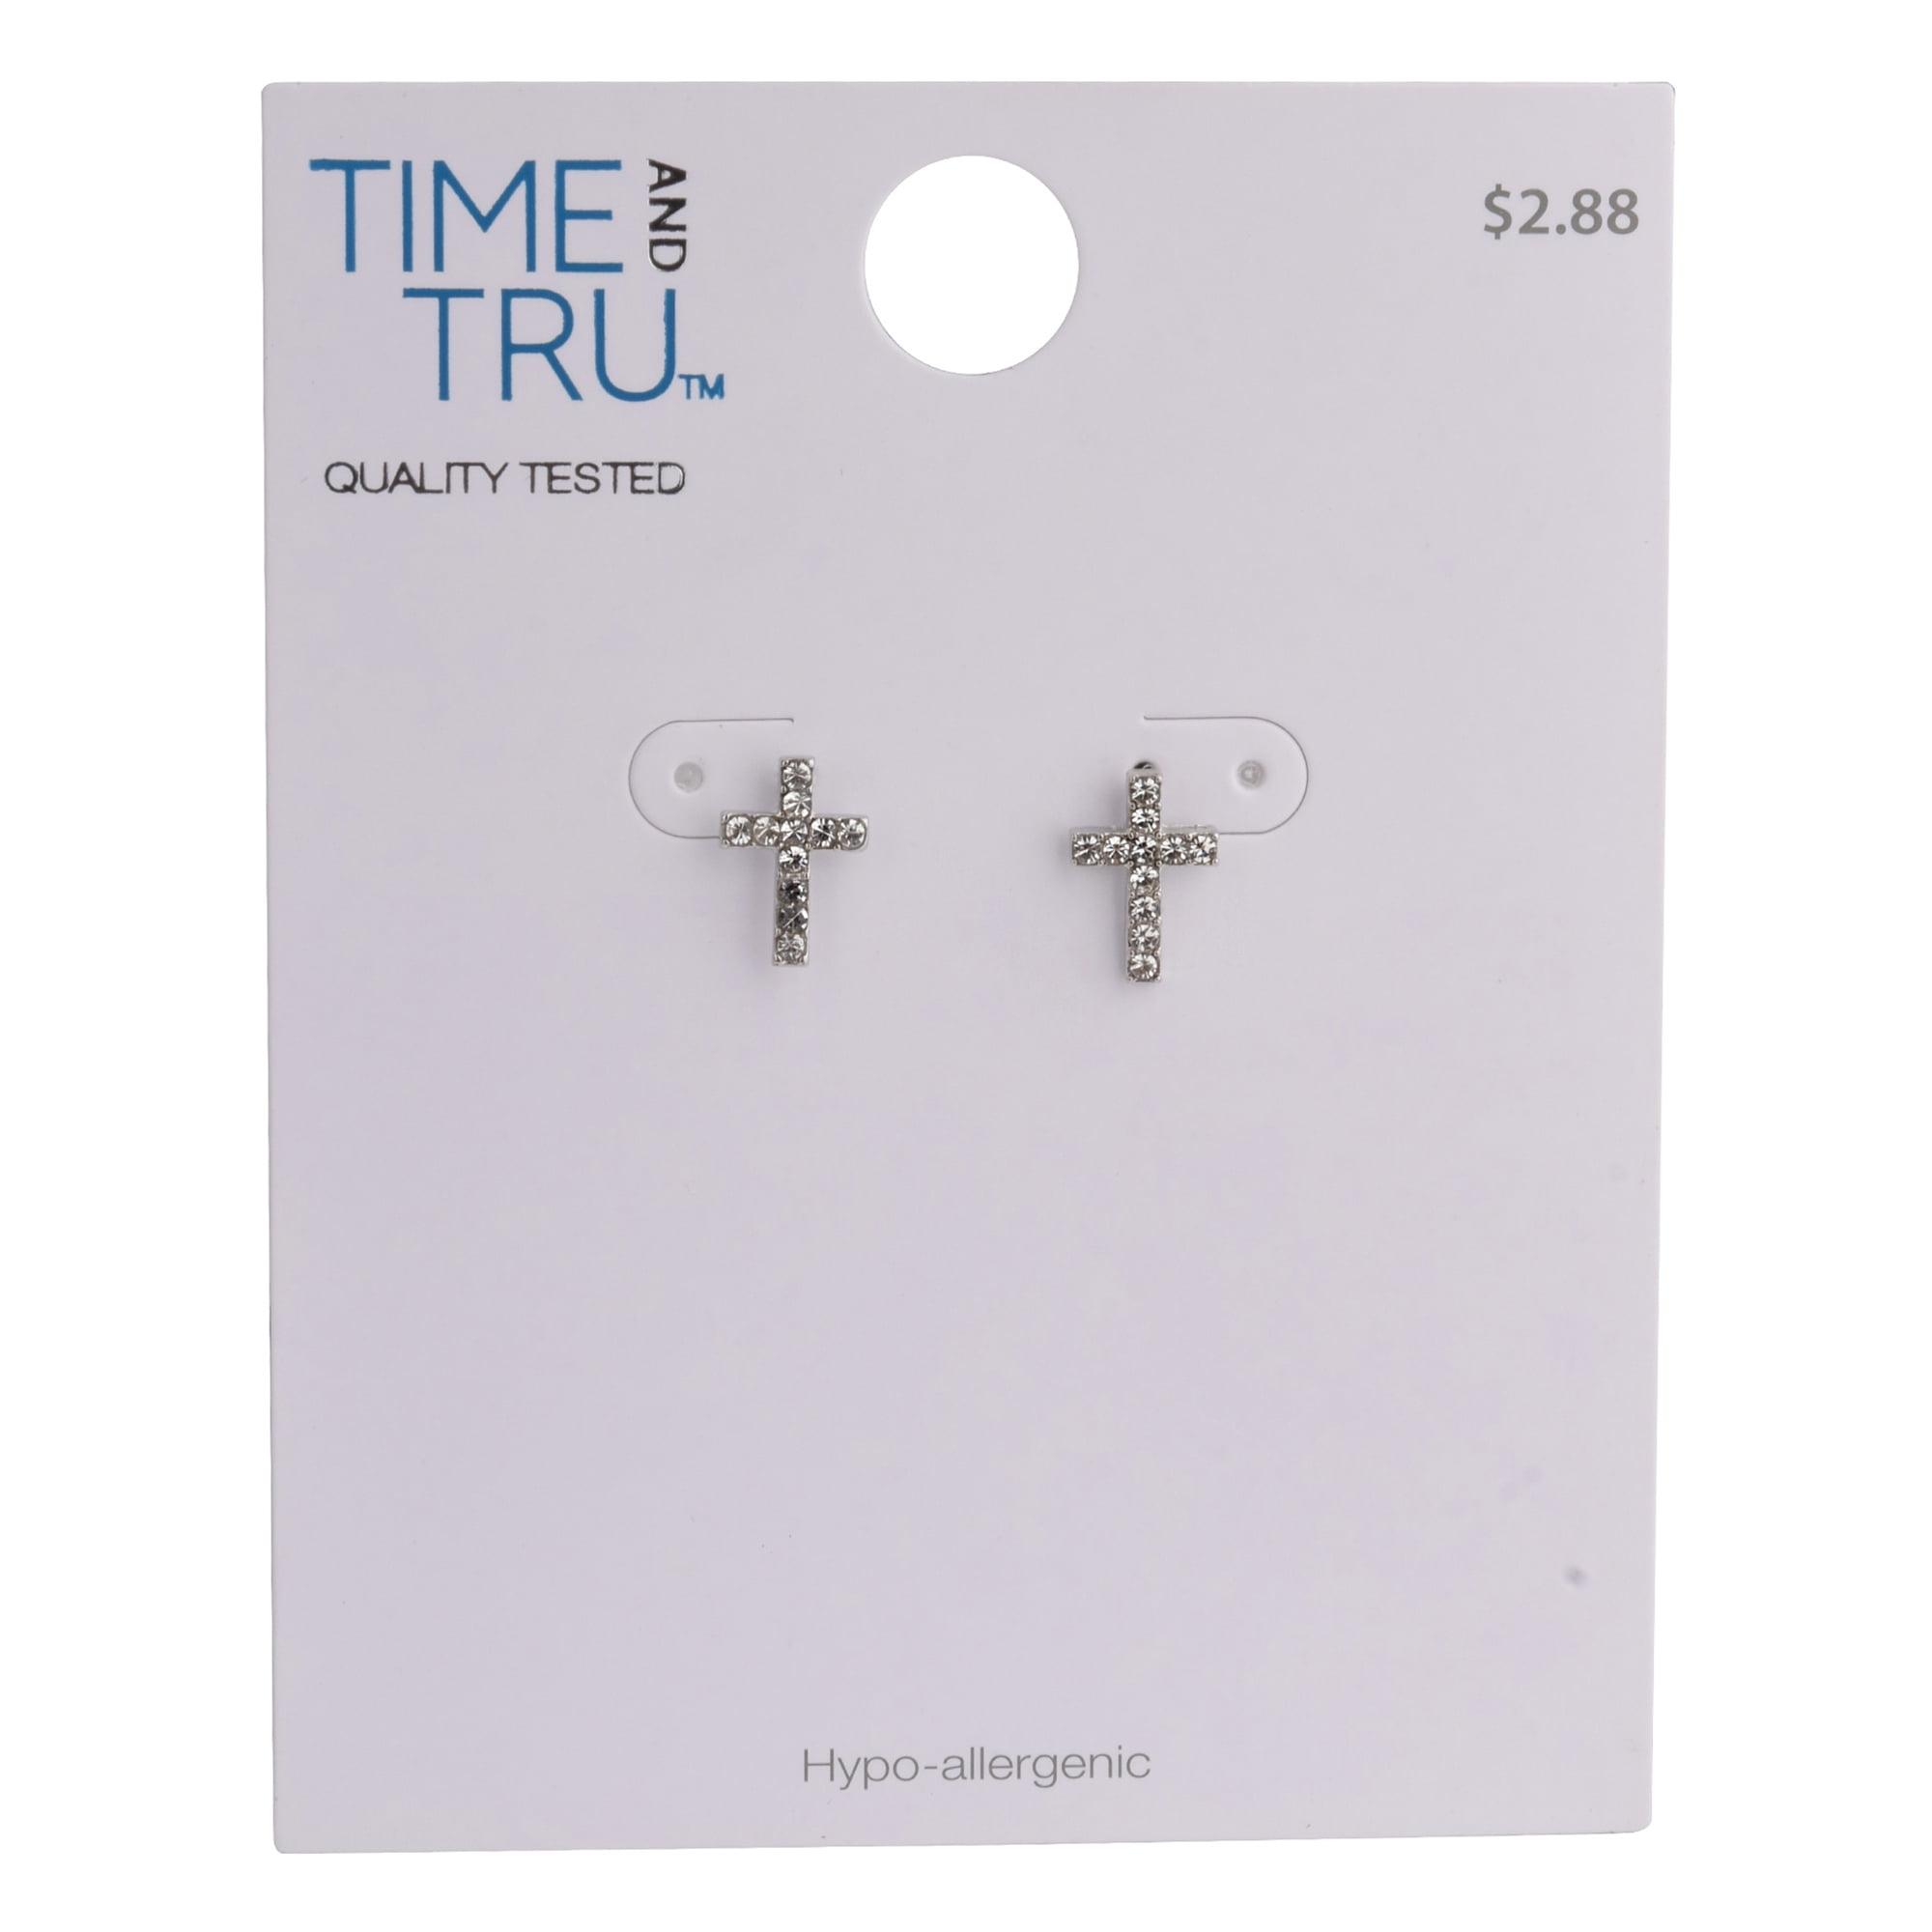 Time and Tru Female Imitation Rhodium Crystal Cross Post Earrings